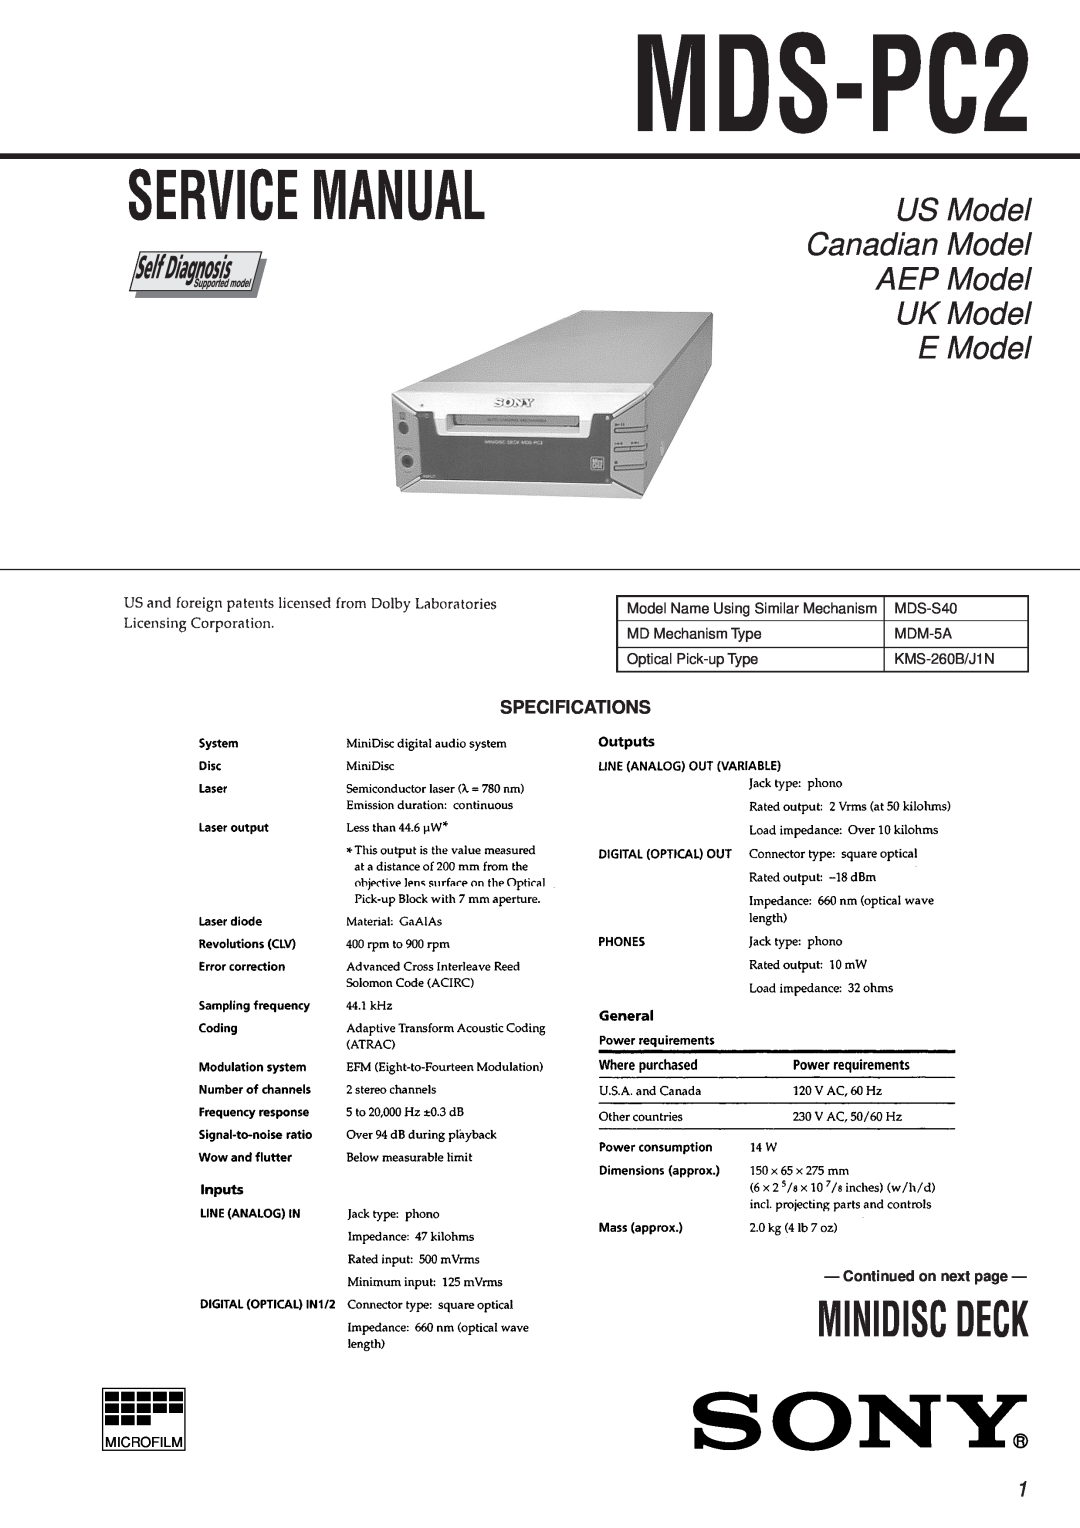 Sony MDS-PC2 service manual Specifications, Minidisc Deck, US Model Canadian Model AEP Model UK Model, E Model 